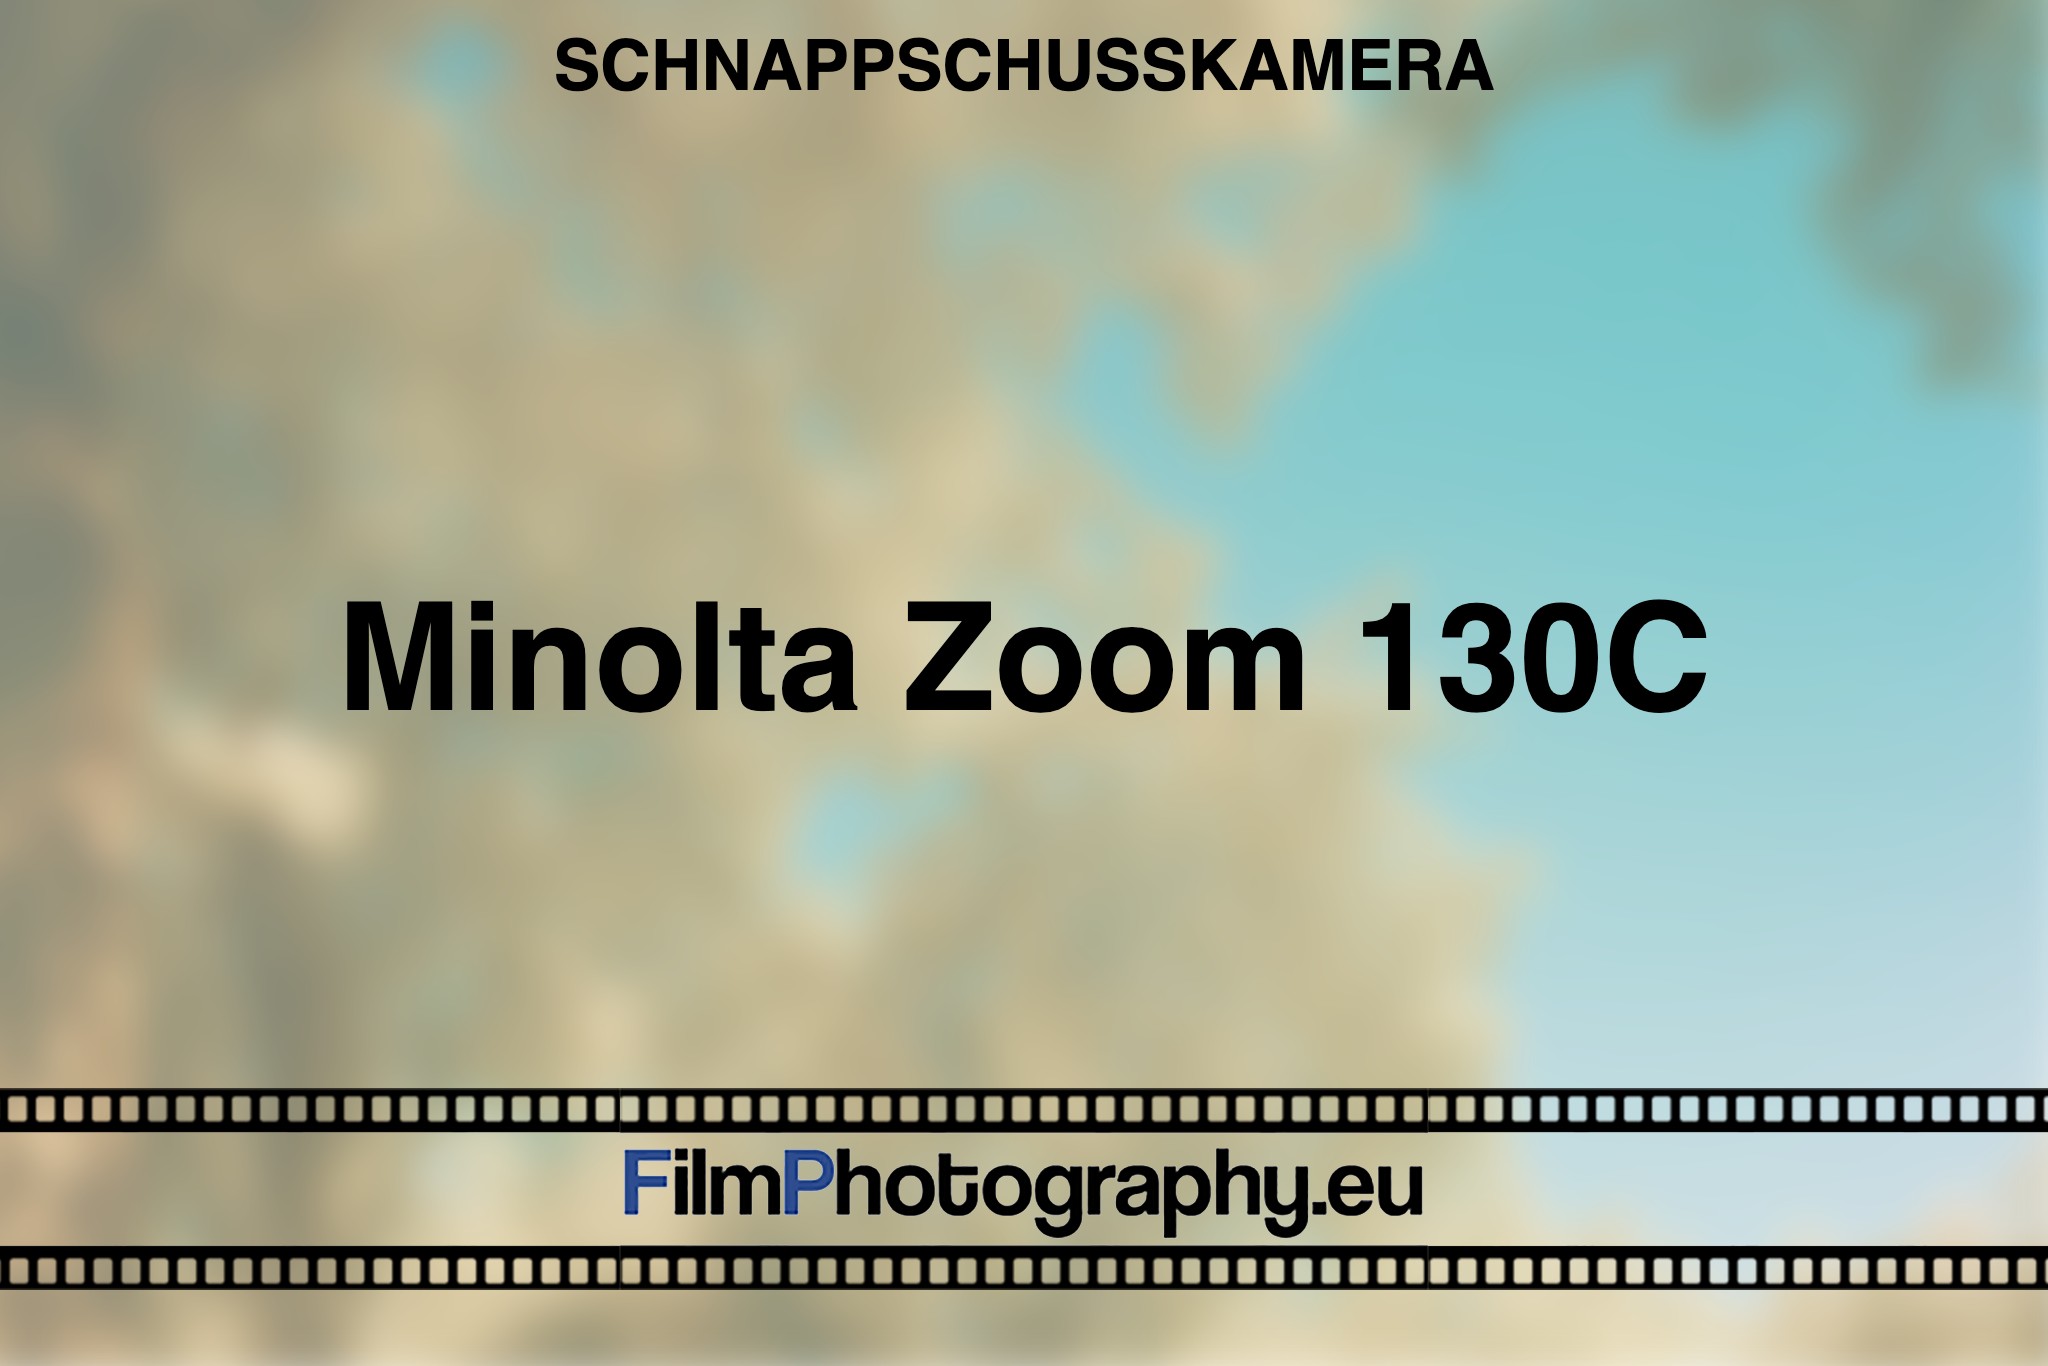 minolta-zoom-130c-schnappschusskamera-bnv